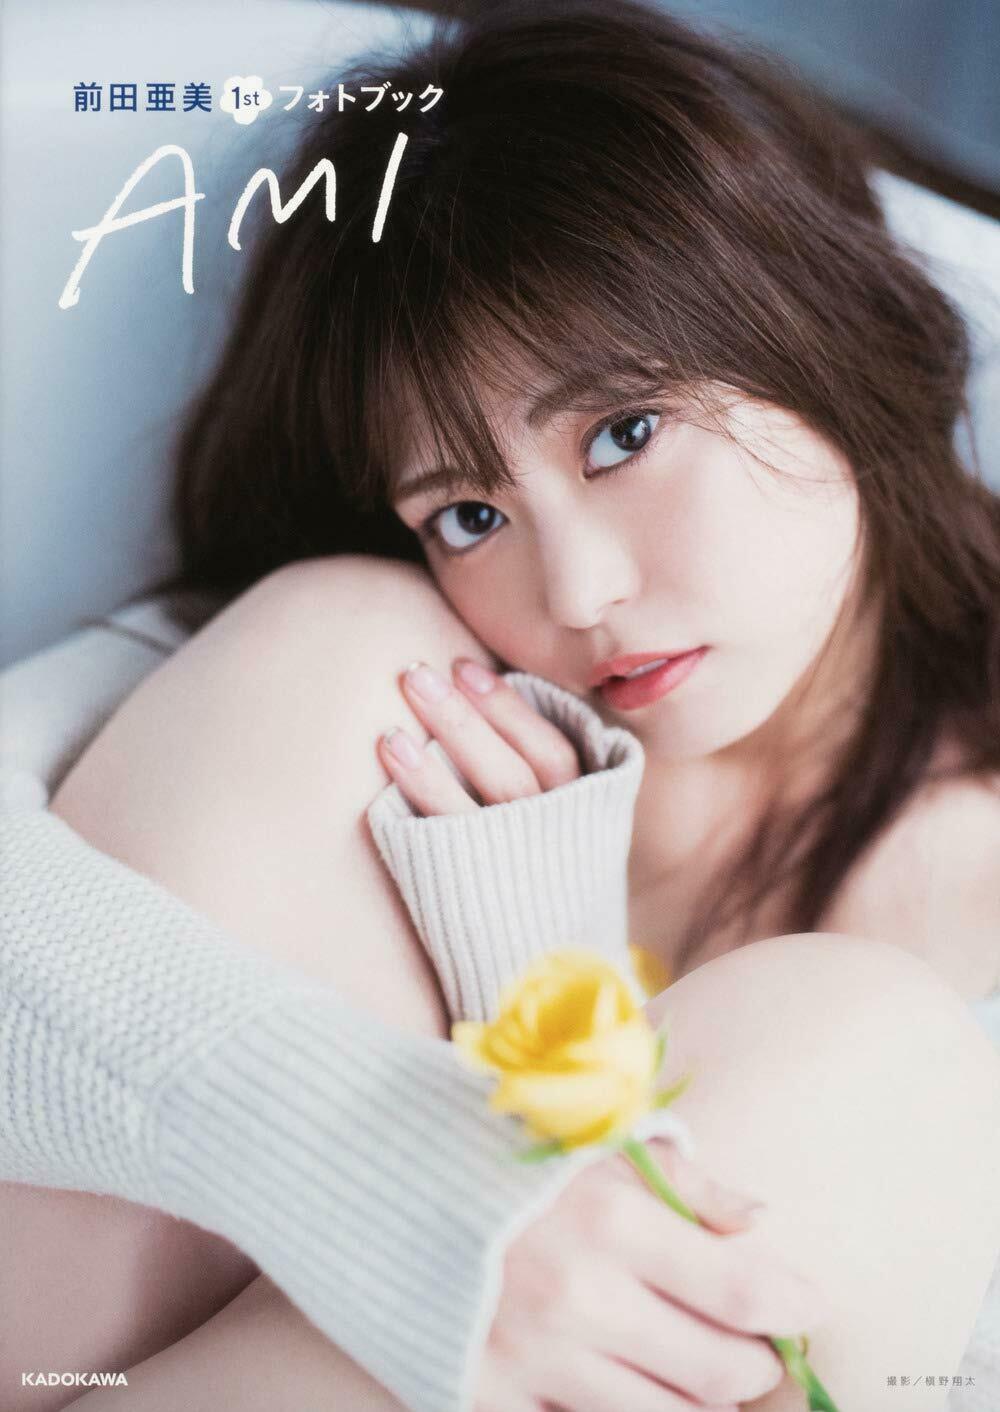 NEW' Ami Maeda 1st Photo Book | Japanese Idol AKB48 Actress